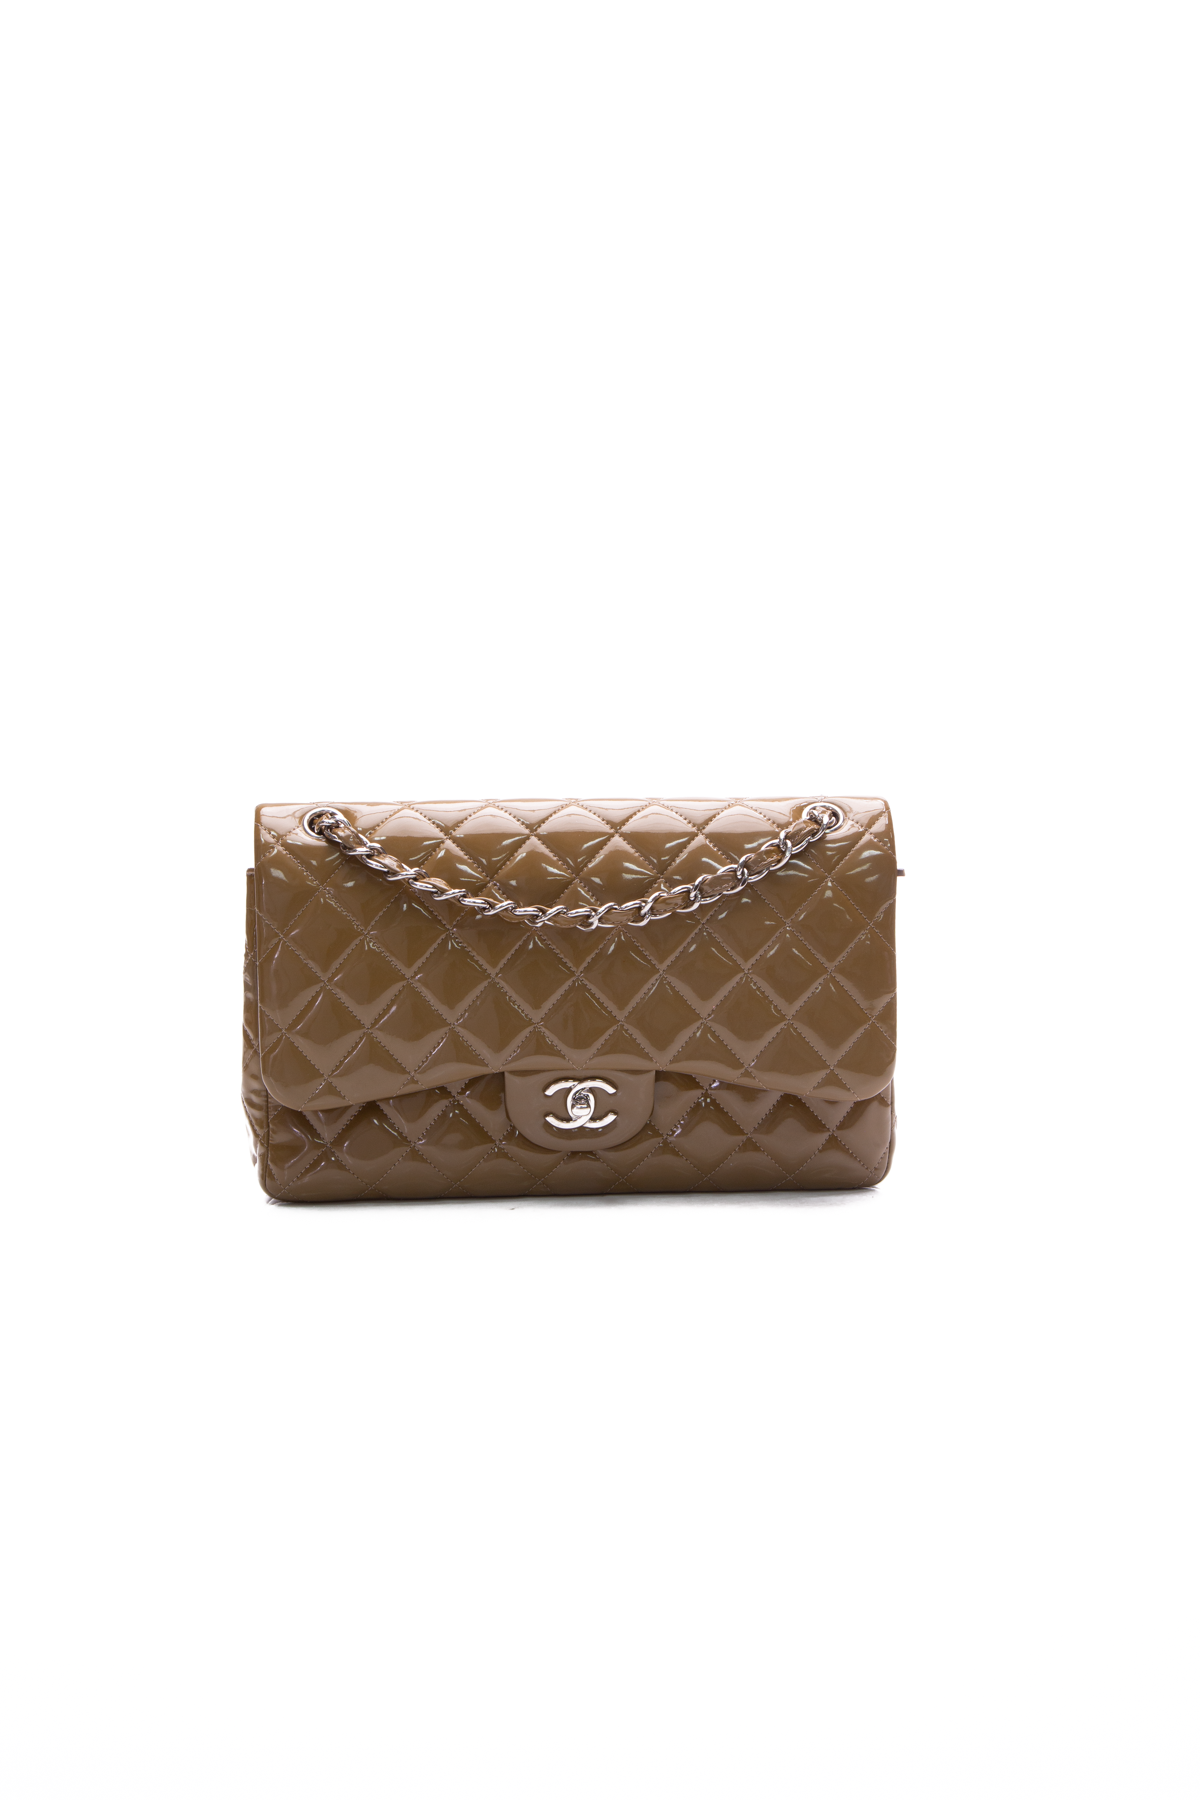 Chanel Classic Jumbo Double Flap Bag - Couture USA